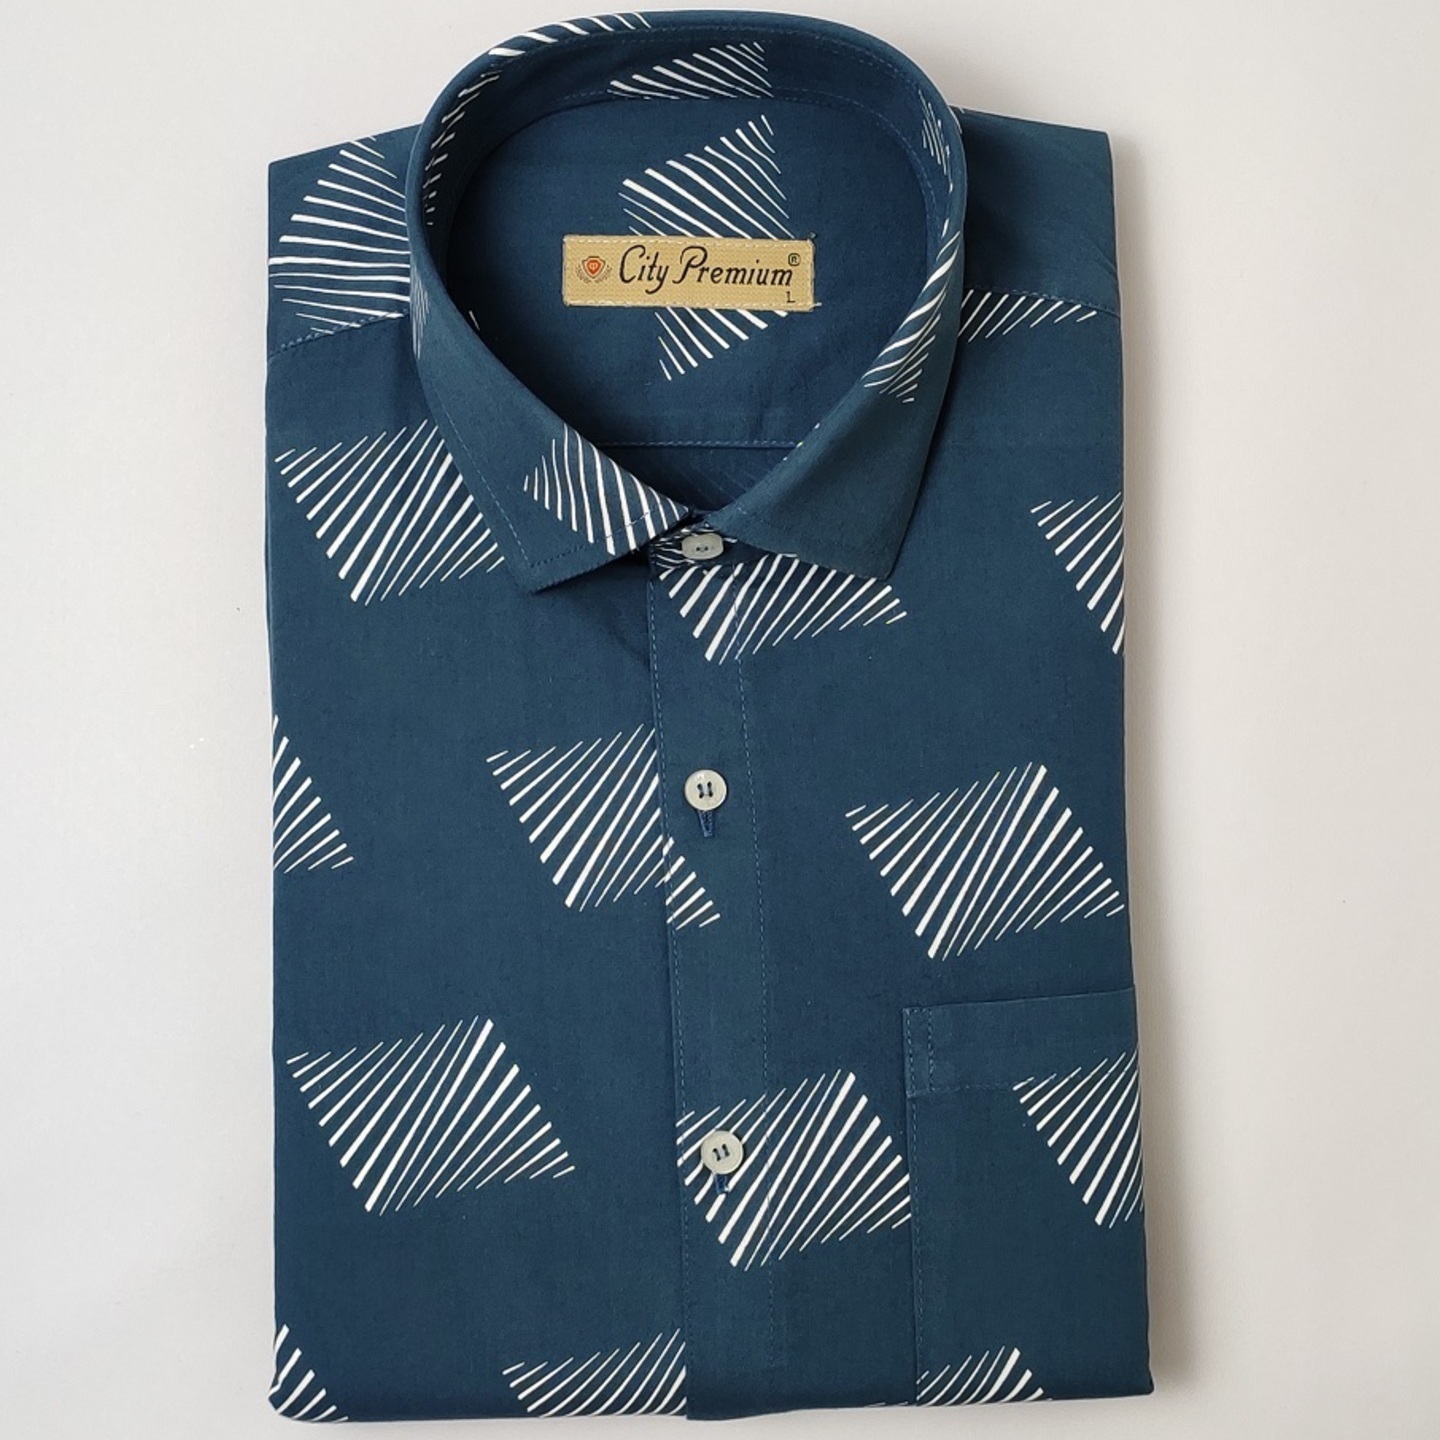 City Premium Mens Blue Printed Casual Shirt